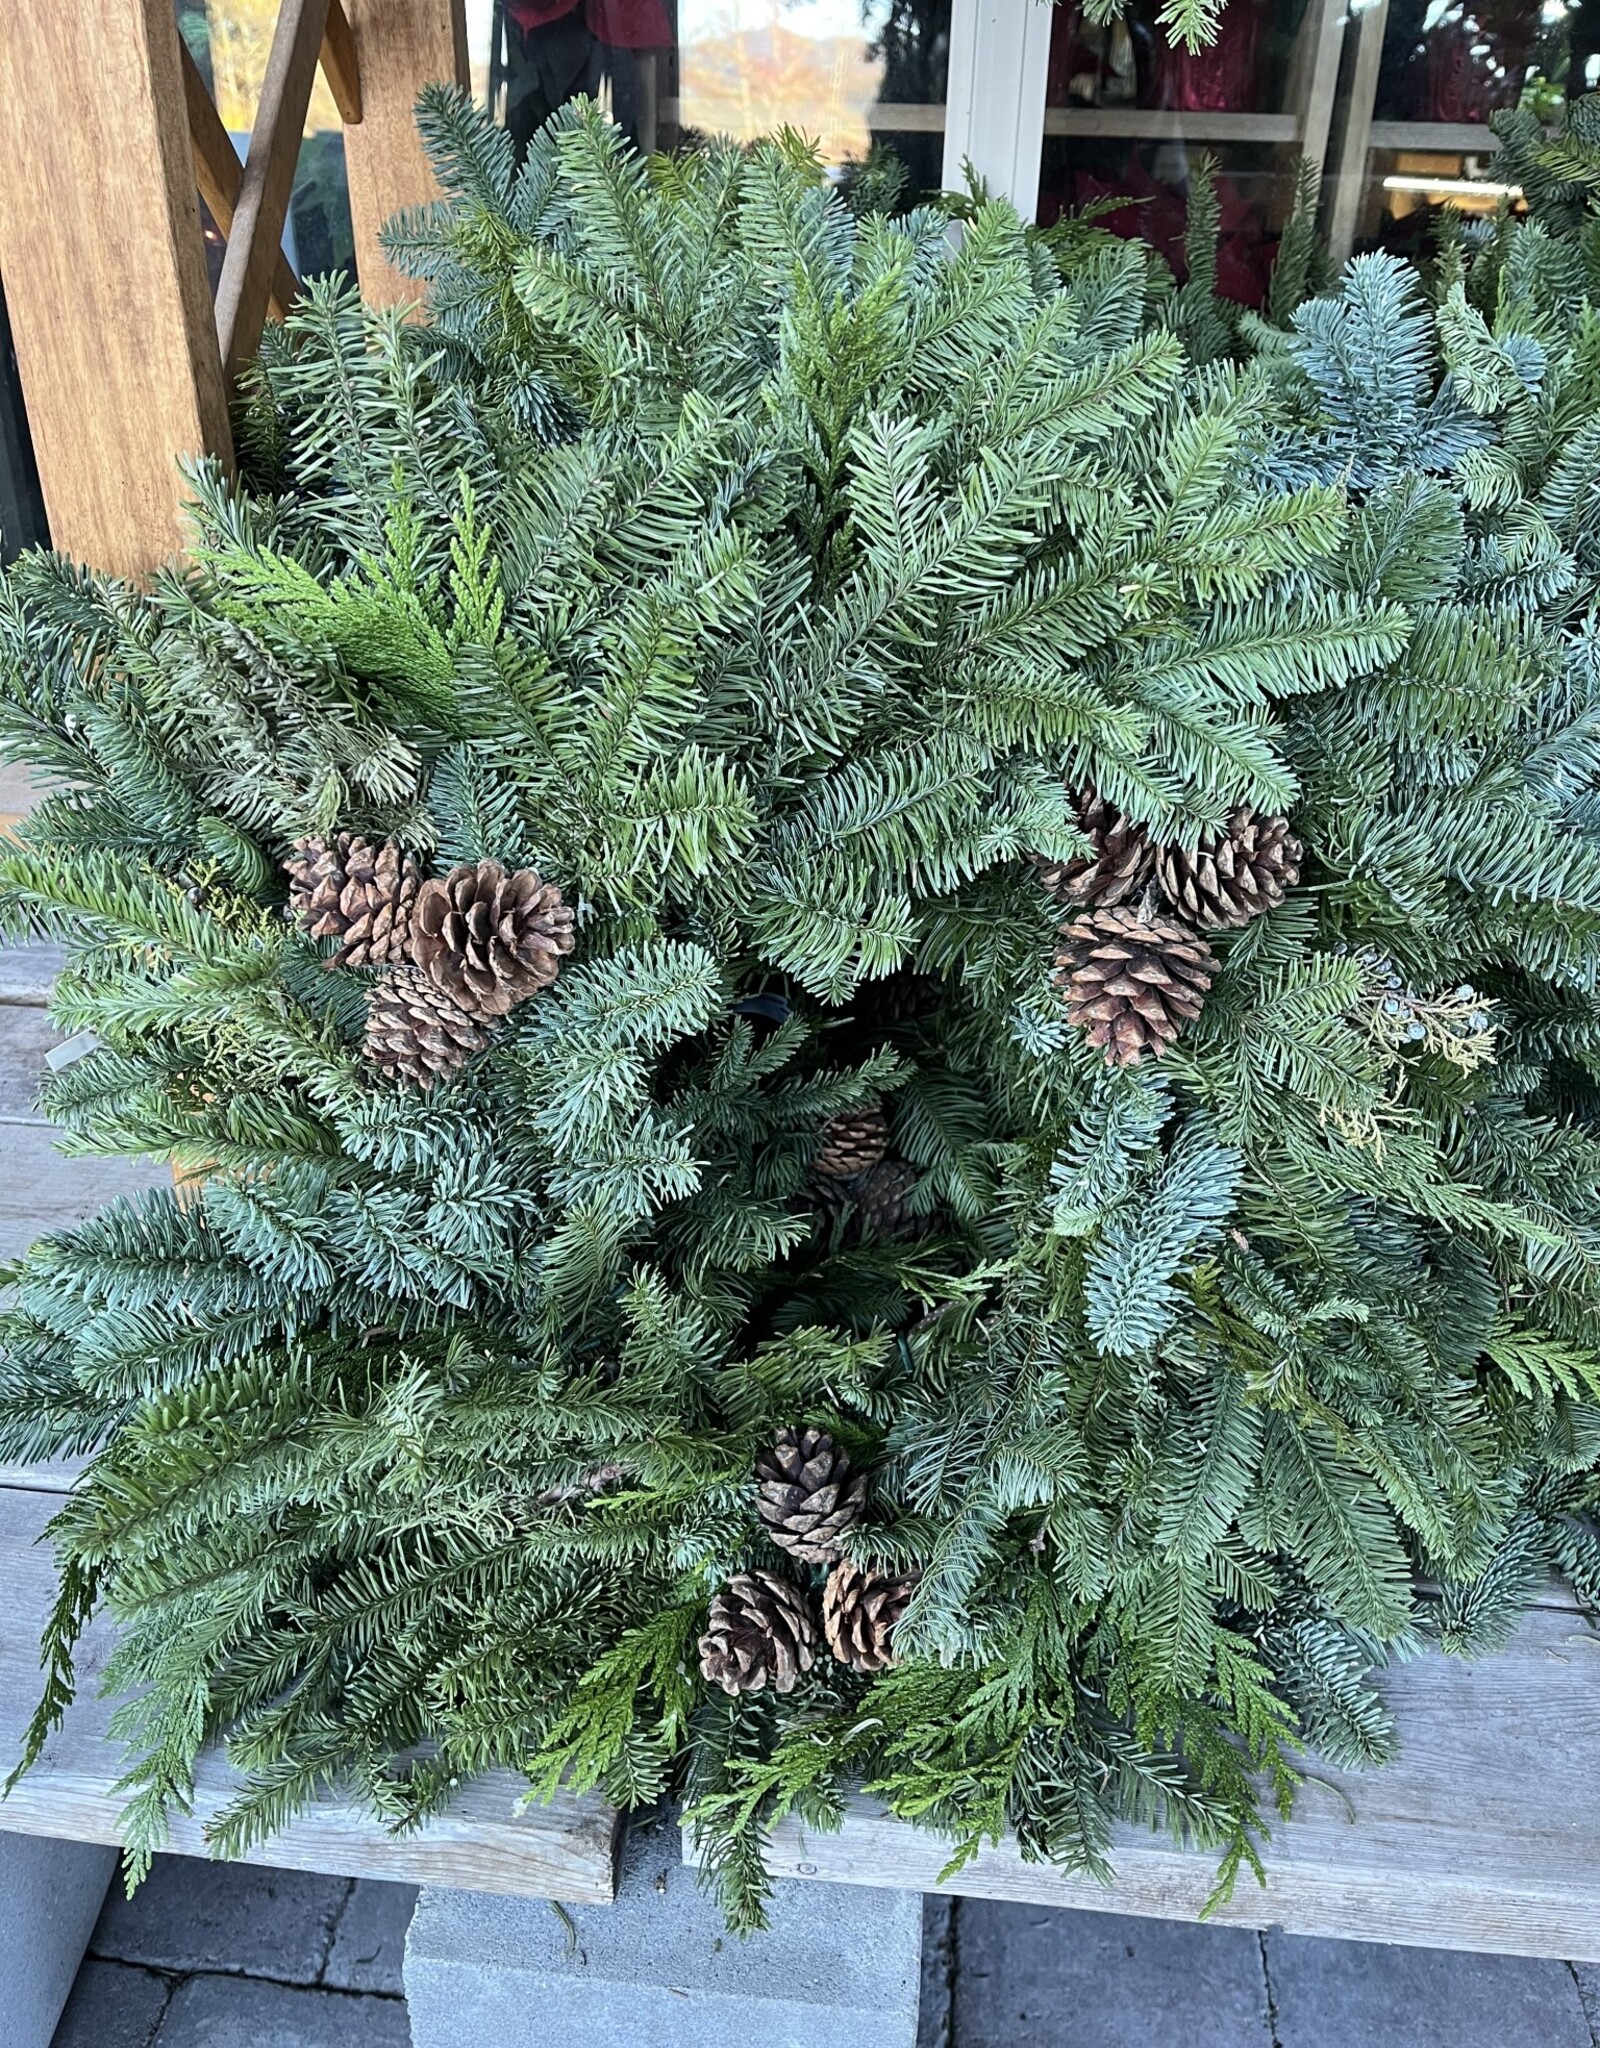 Mixed Greens Wreath 24 inch